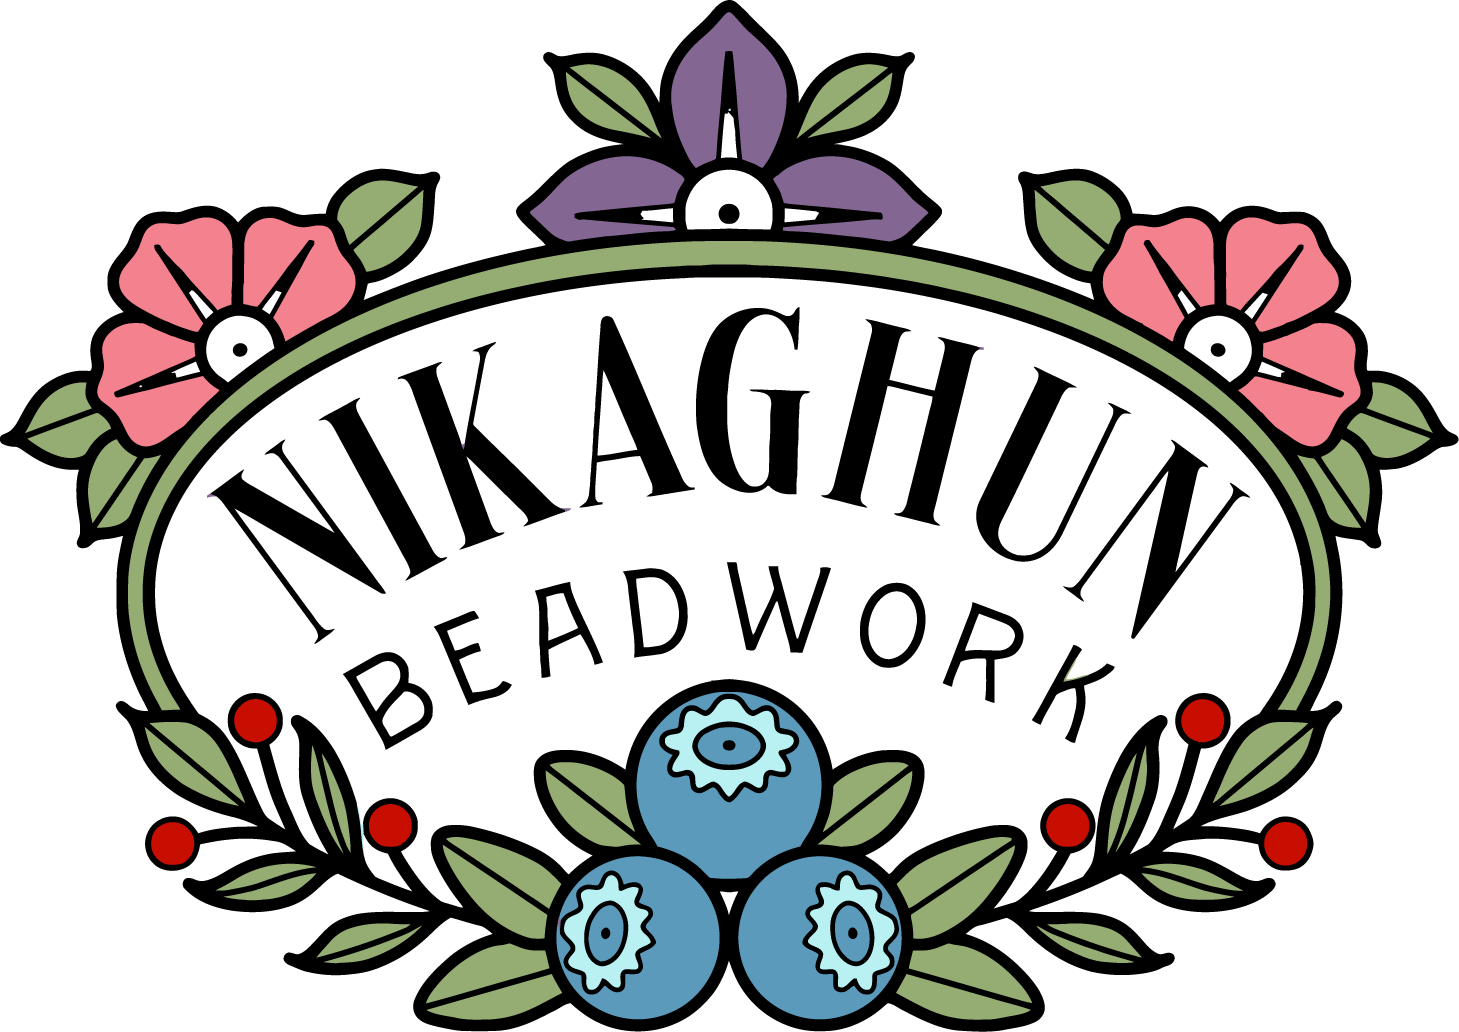 Nikaghun Beadwork